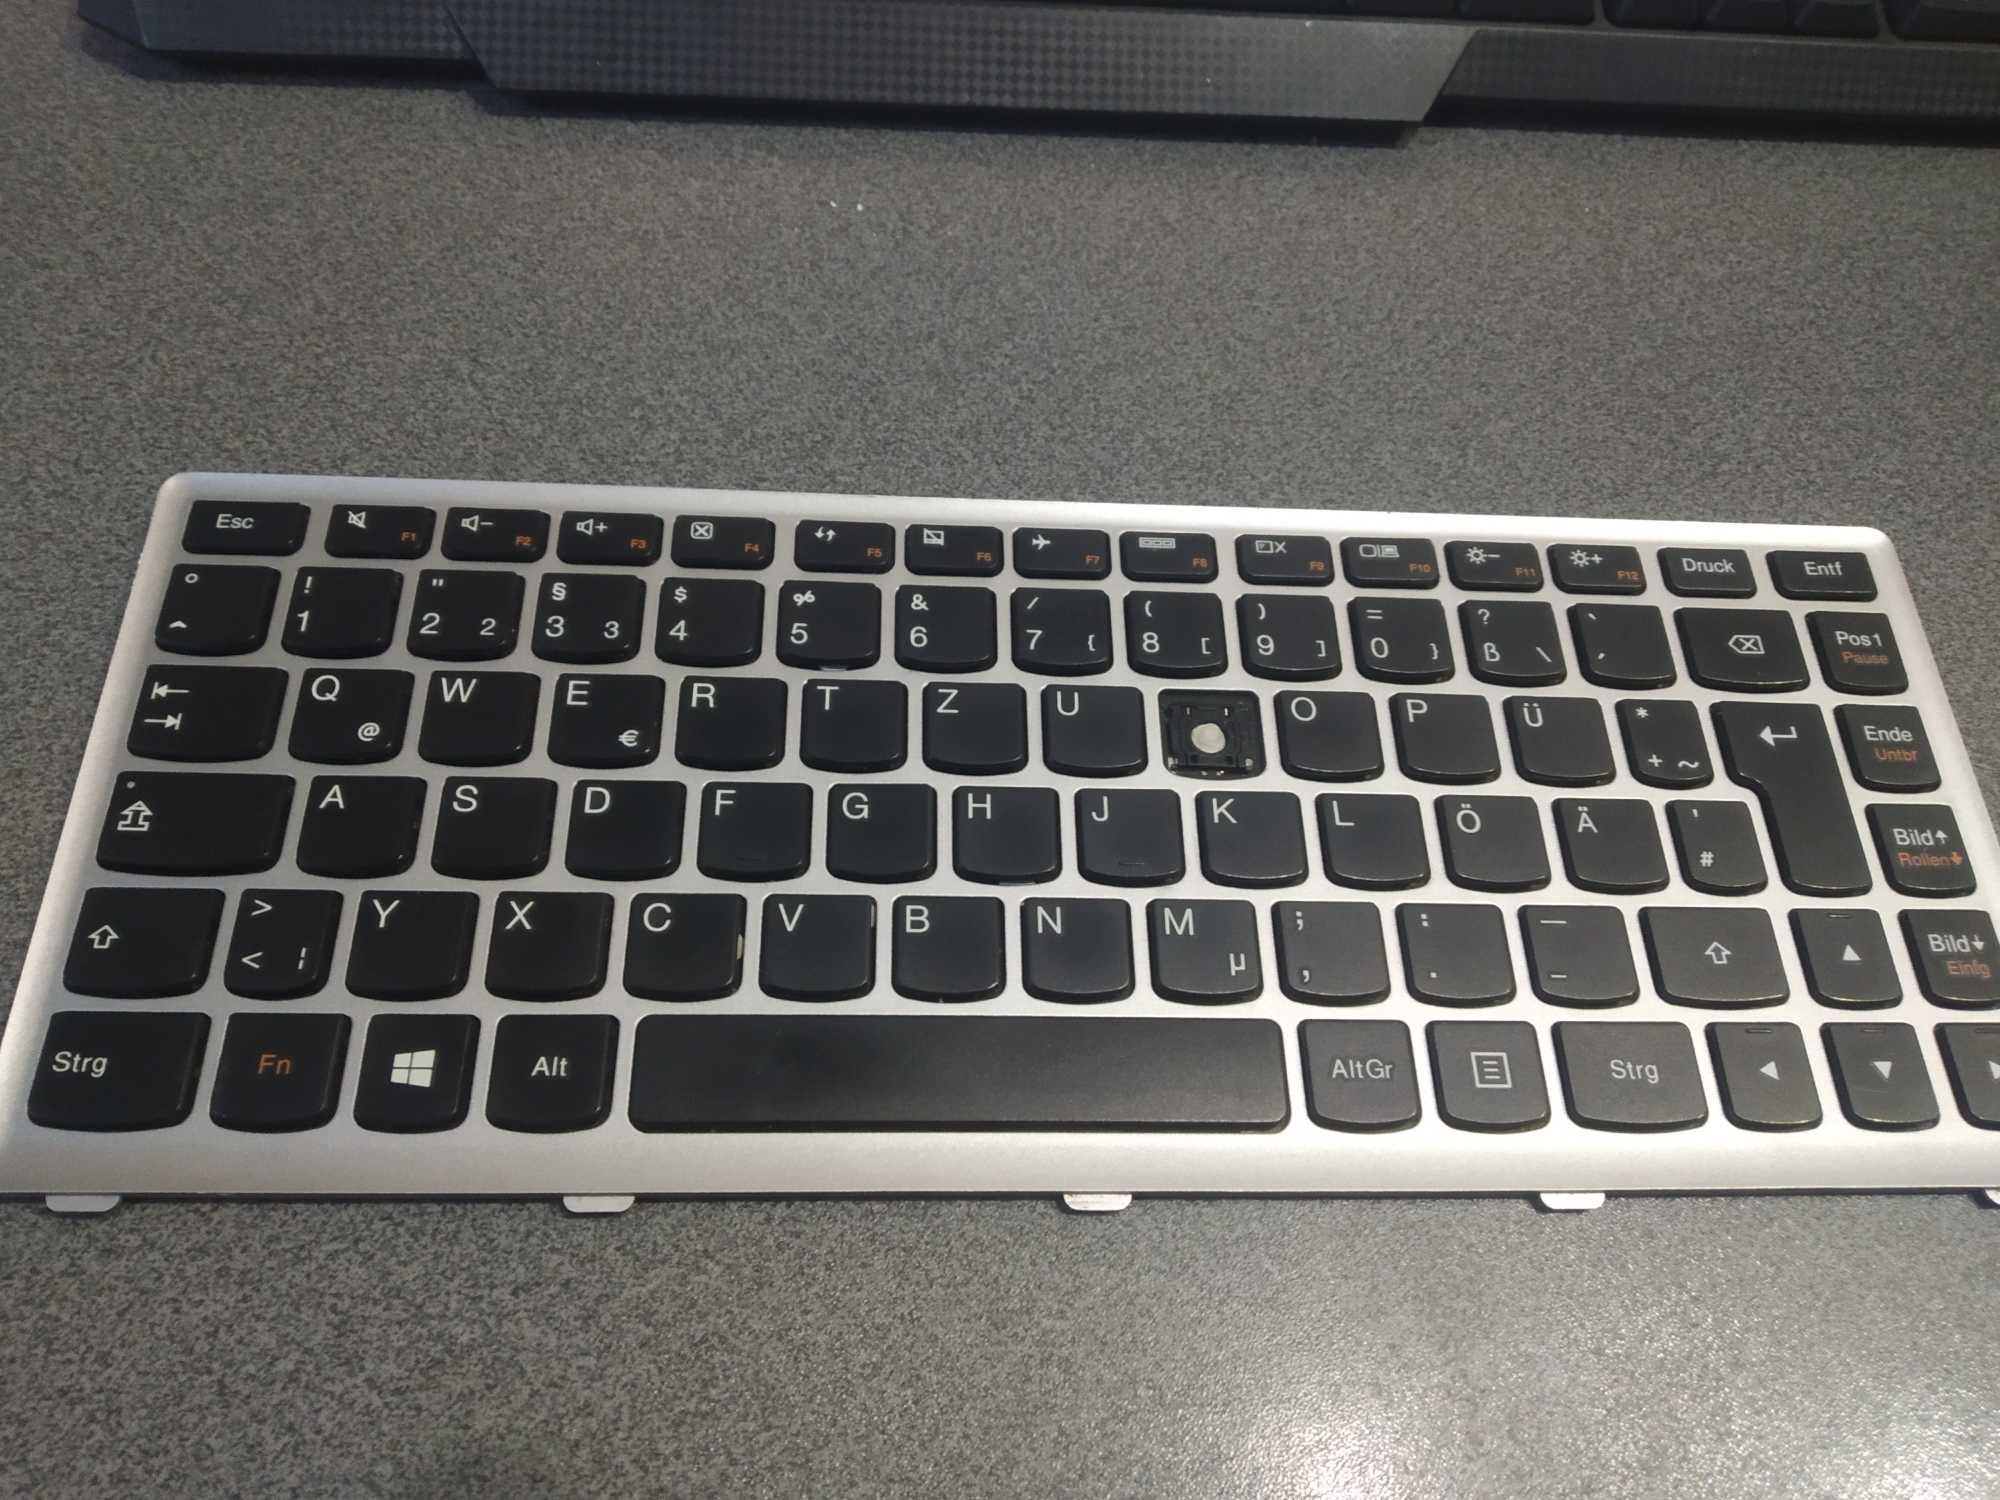 Клавиатура LENOVO IdeaPad U310, U410, U430